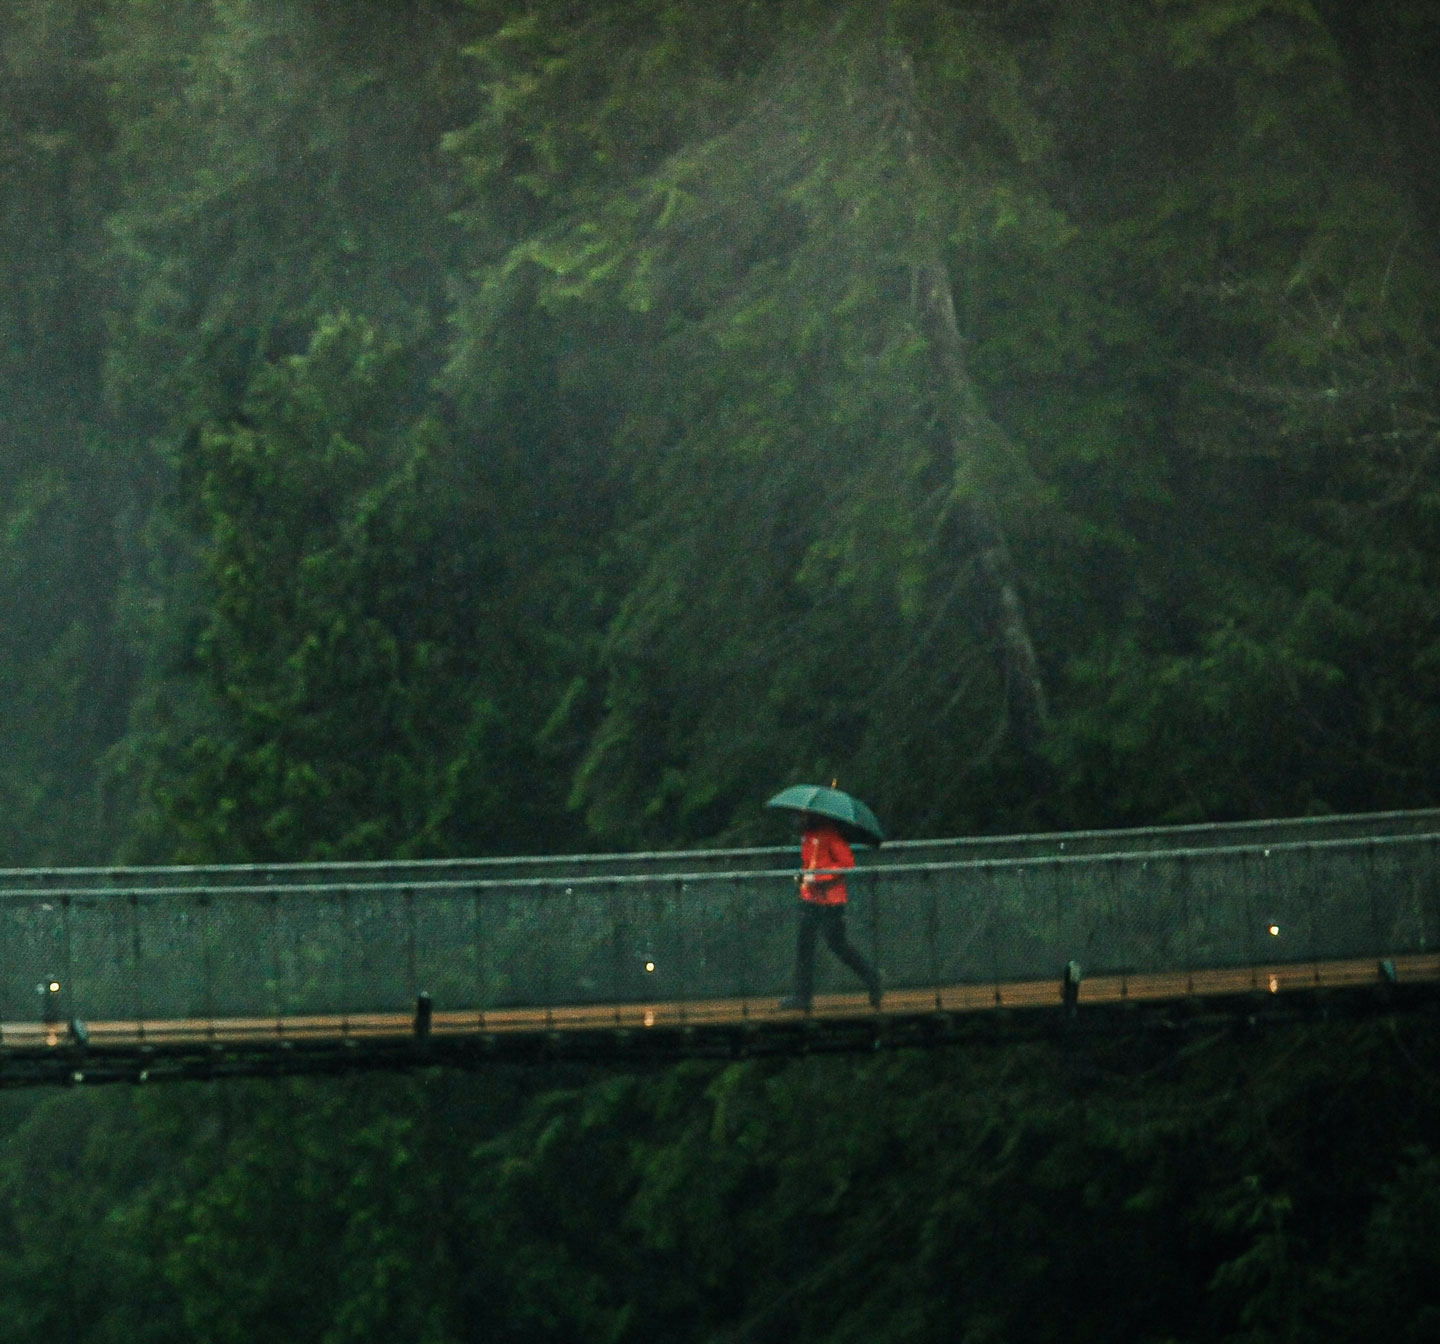 a person walking on a bridge with an umbrella